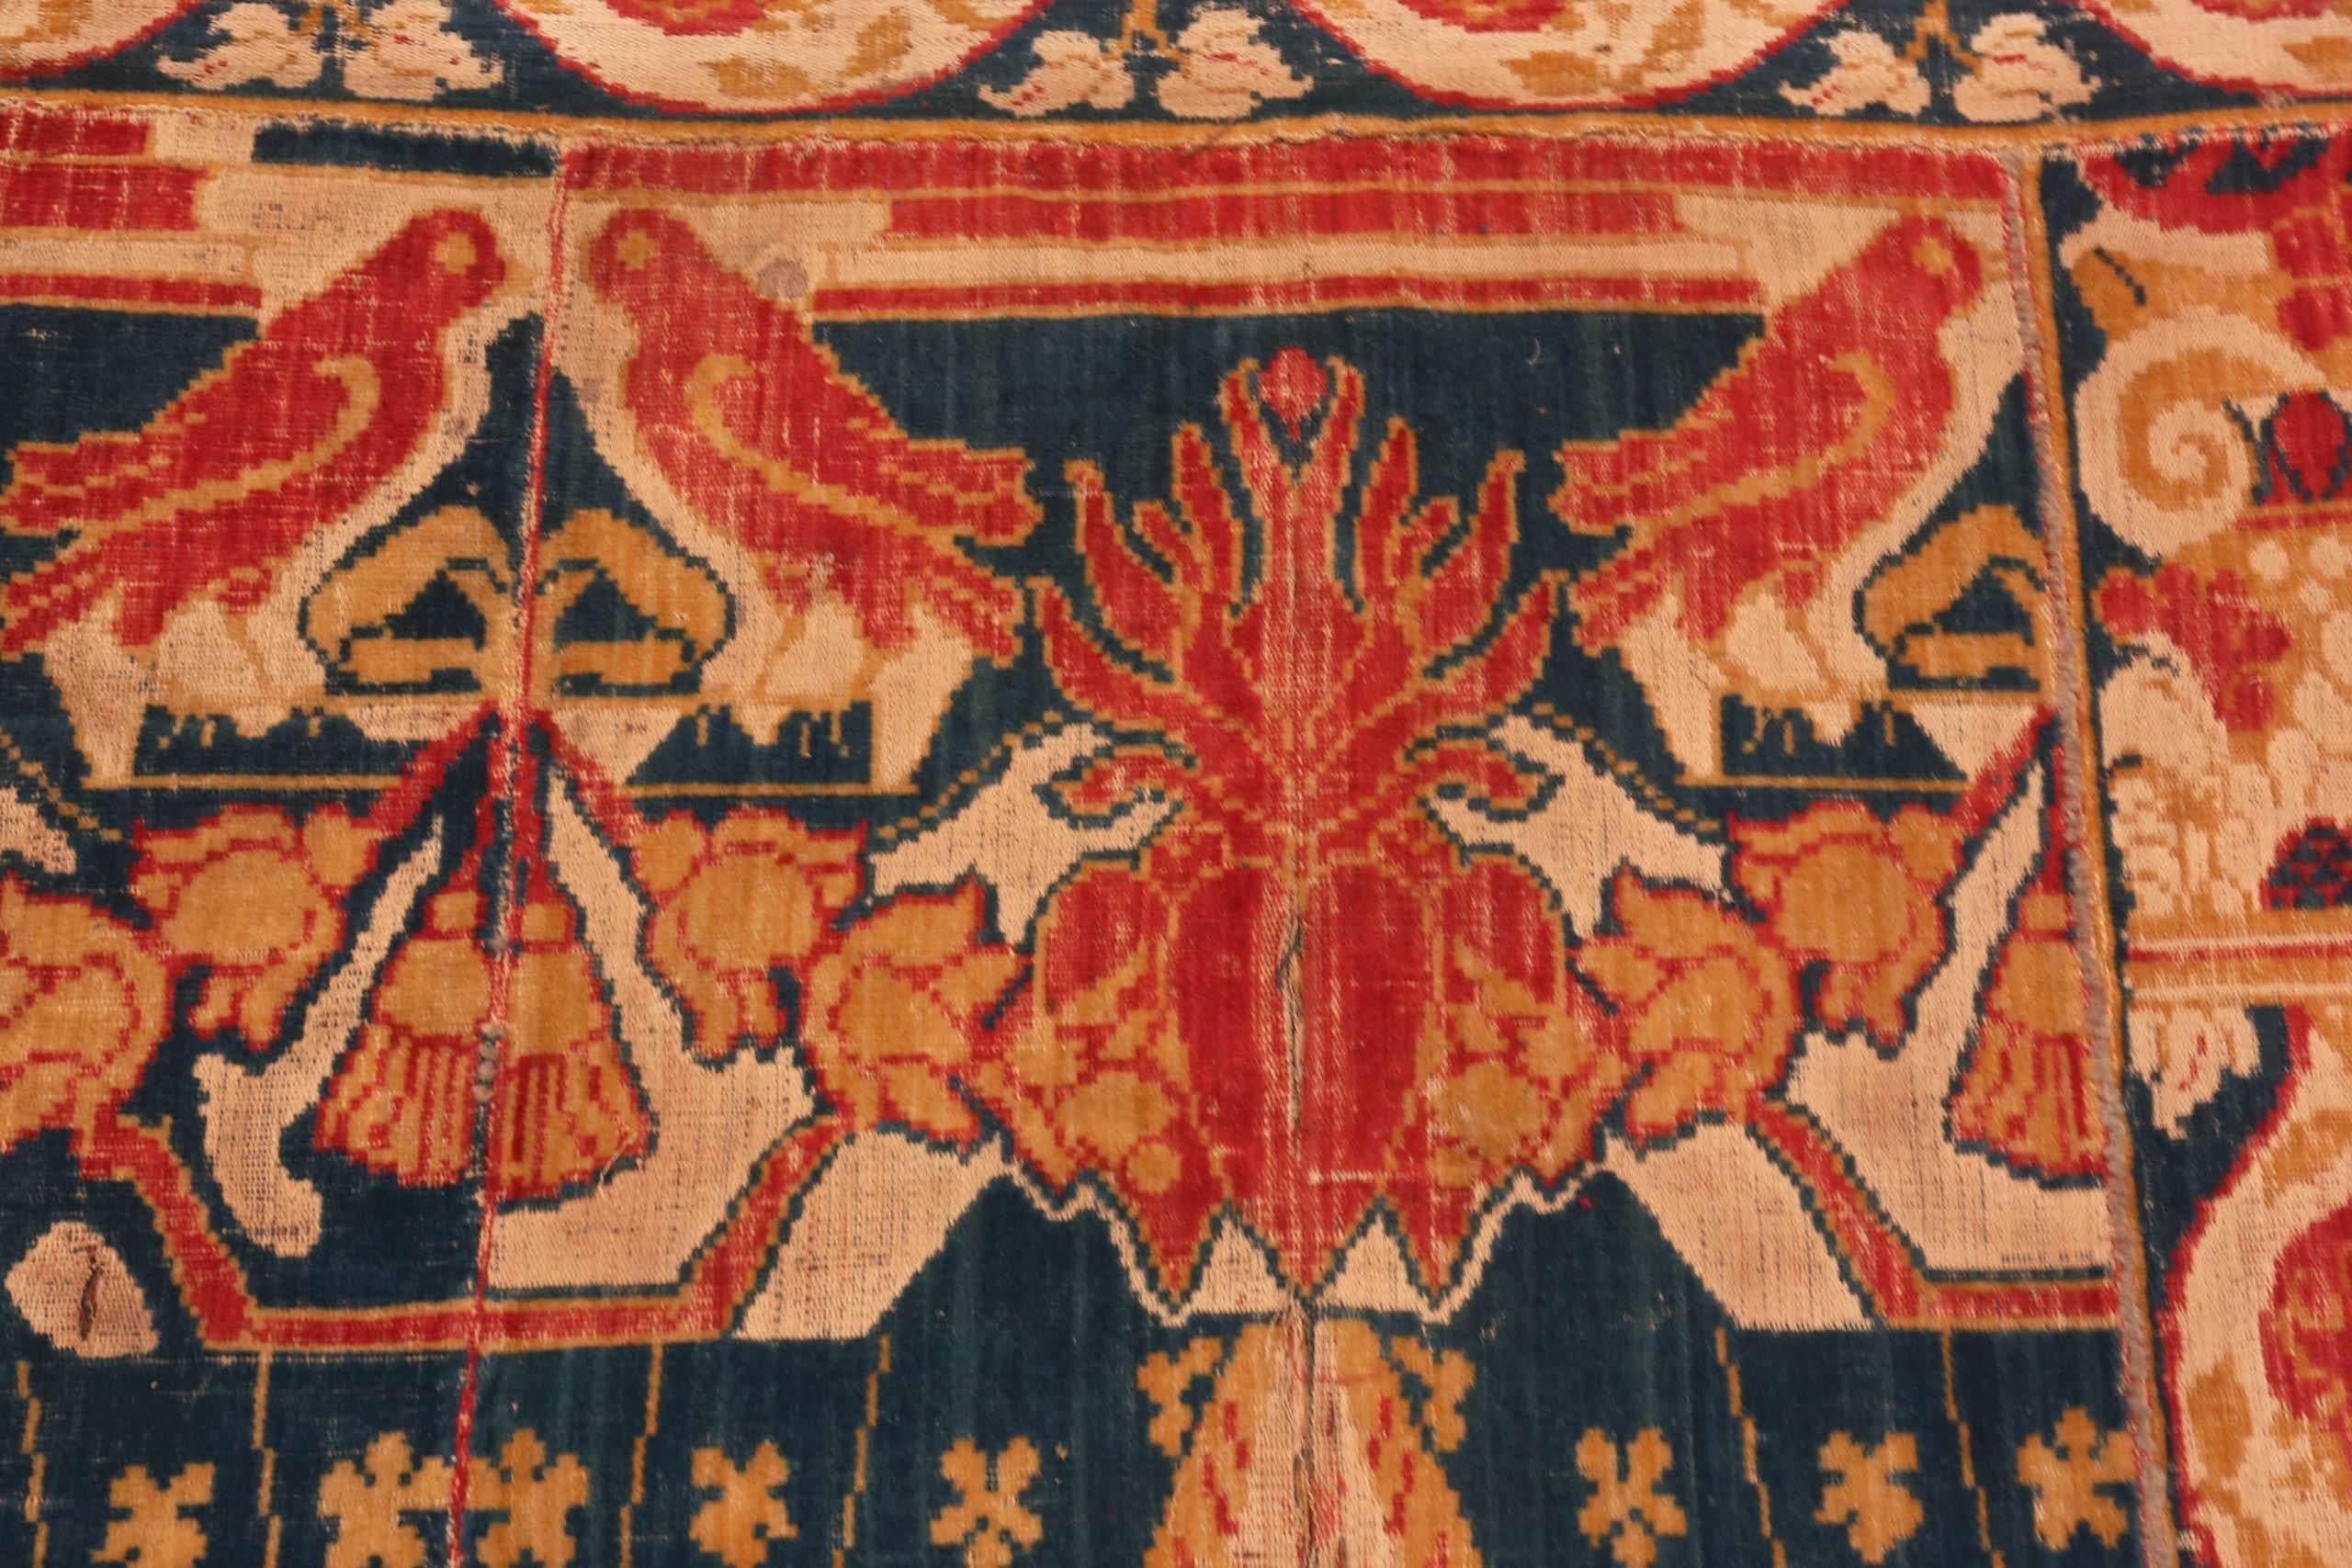 Hand-Woven 18th Century Antique Velvet Wall Hanging Dutch Textile 6'3